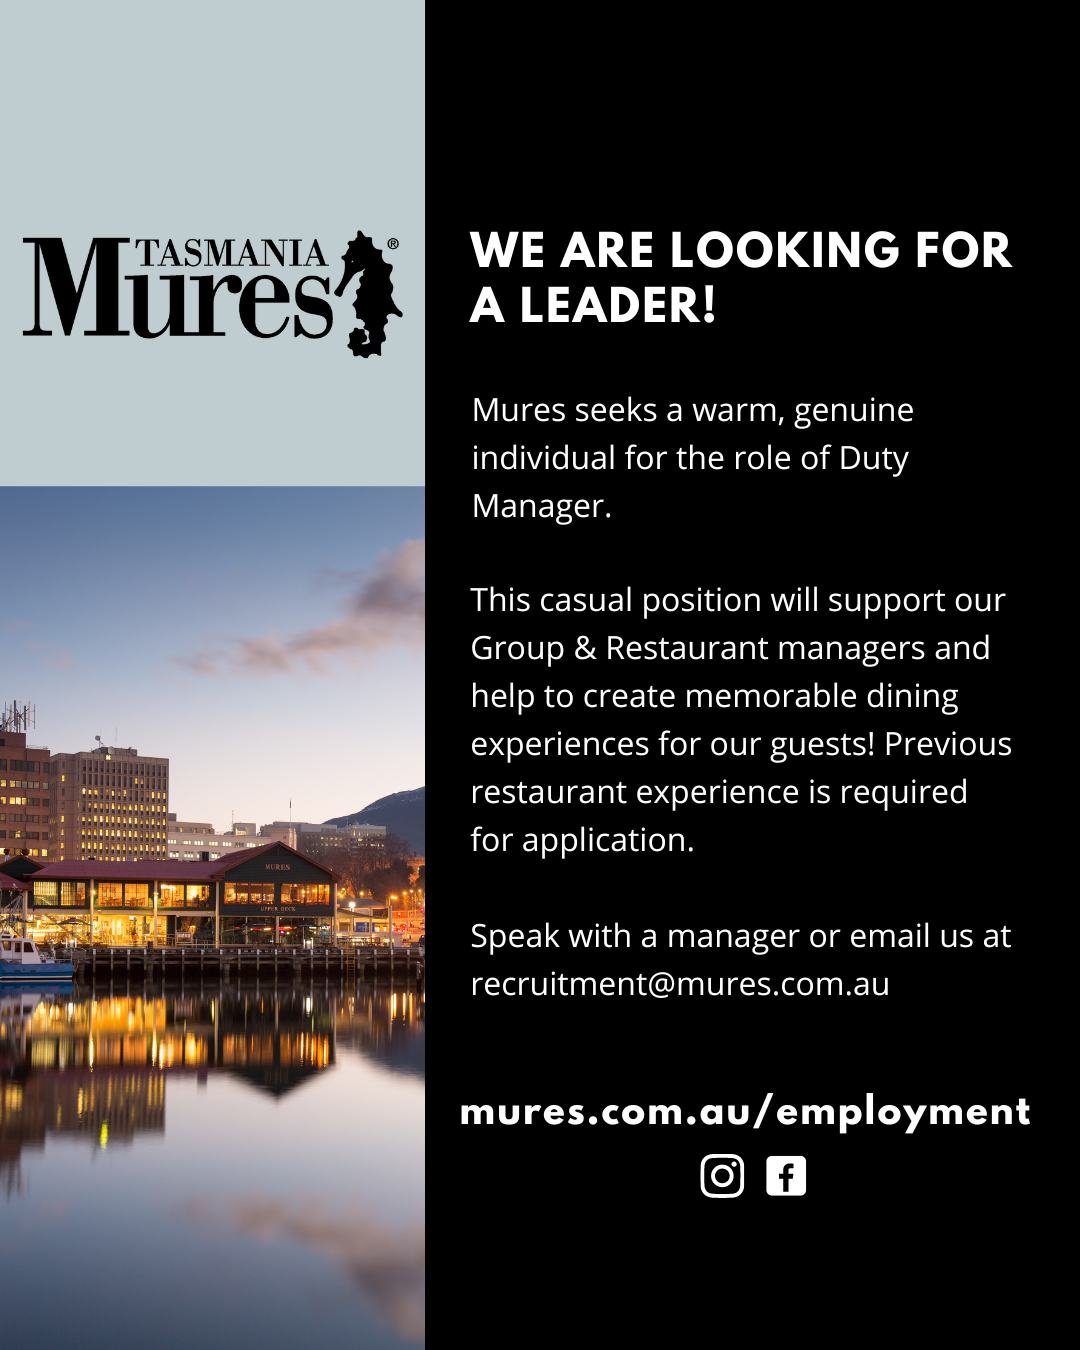 Come join the Mures crew!
.
#MuresTasmania #MuresUpperDeck #nowhiring #hobartjobs #hospitalityjobs #staffwanted #hospitality #seafoodrestaurant